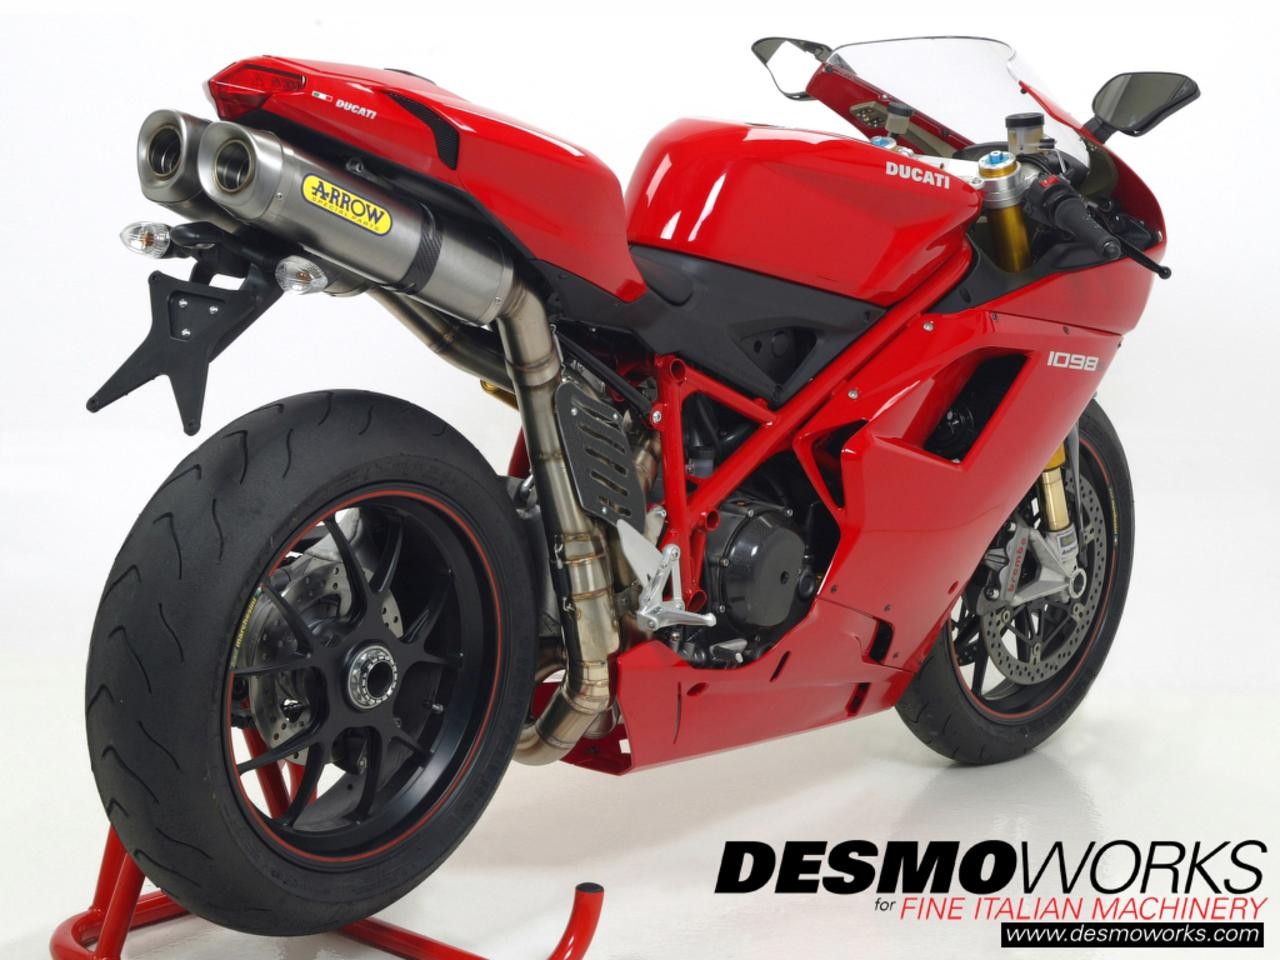 General 1280x960 Ducati motorcycle vehicle Ducati 1098 Red Motorcycles Volkswagen Group Italian motorcycles